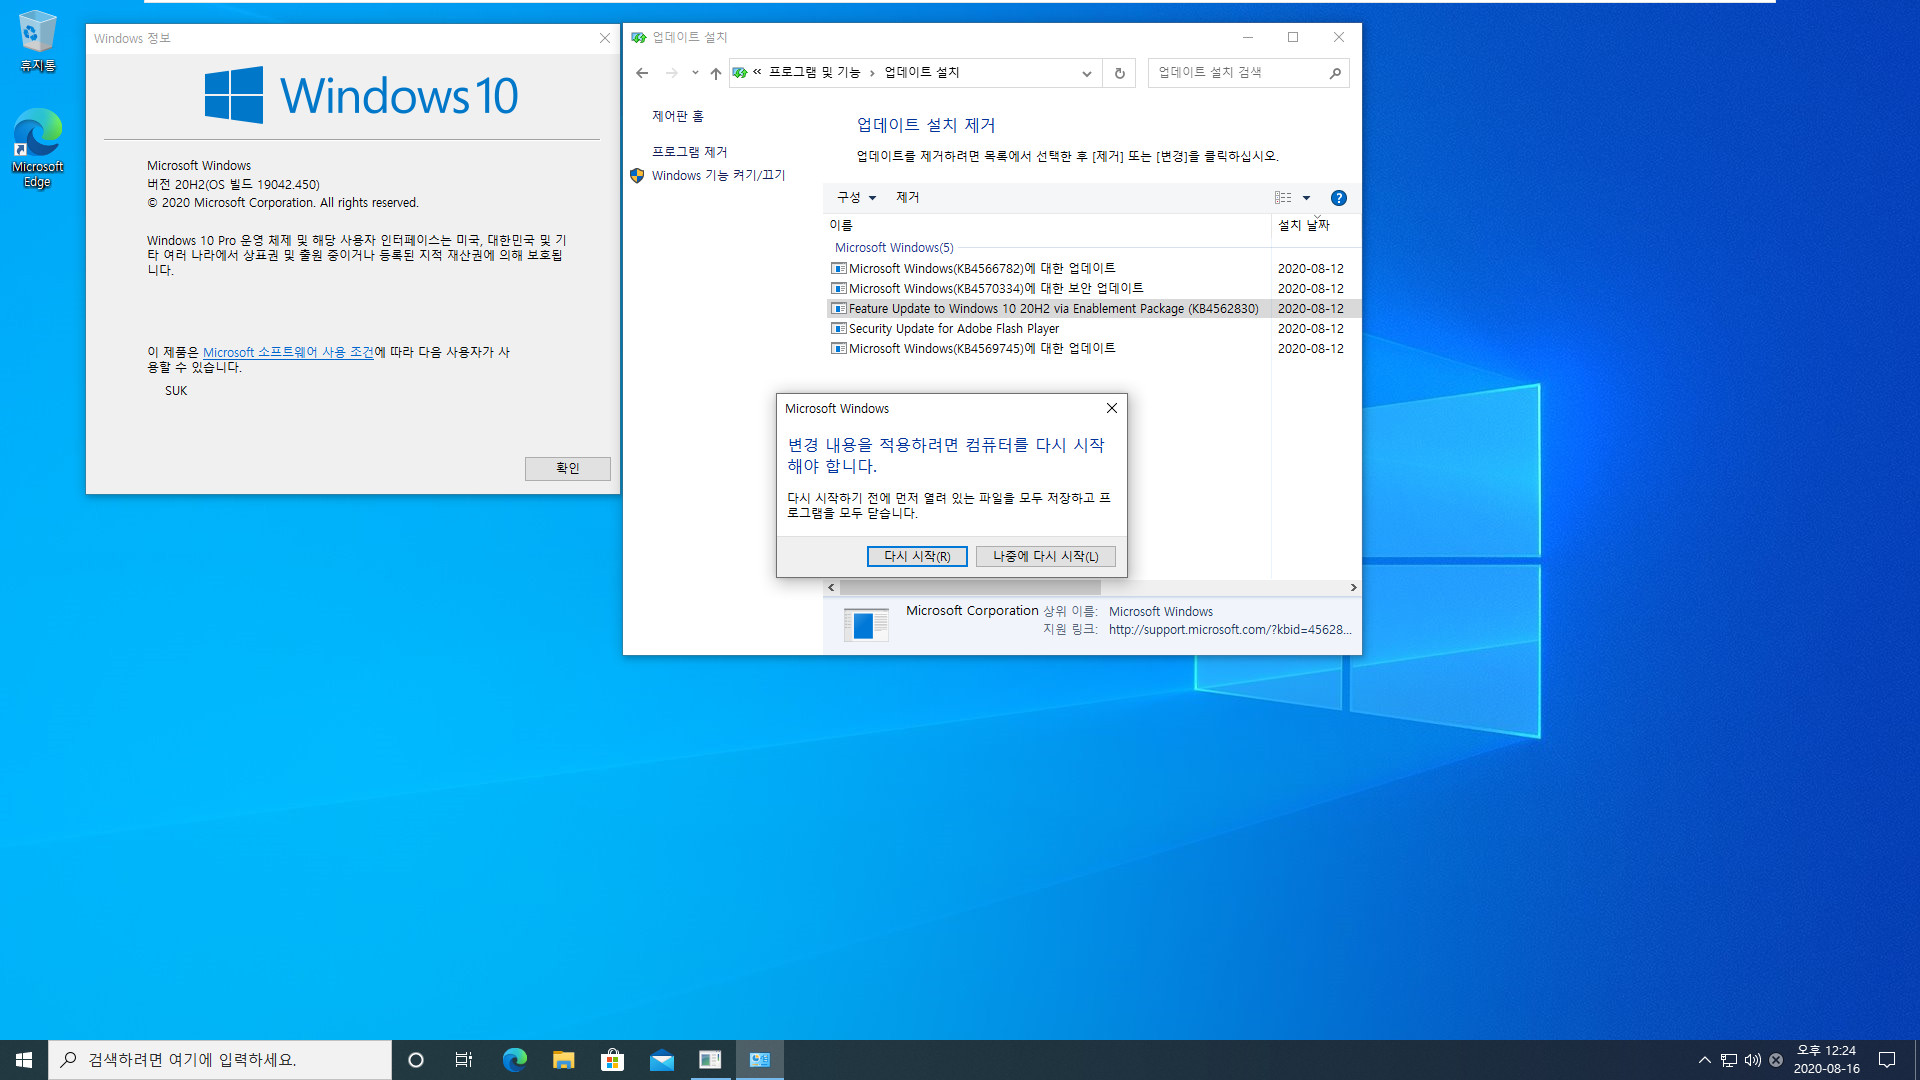 Windows 10 버전 20H2 (OS 빌드 19042.421) 베타 채널부터 새로운 시작 메뉴와 함께 시스템 속성이 설정의 정보로 뜹니다 - 20H2 기능 업데이트 KB4562830 제거하면 버전 2004가 되면서 이전의 시스템이 열립니다. 새로운 시작 메뉴도 적용되지 않습니다 2020-08-16_122412.jpg